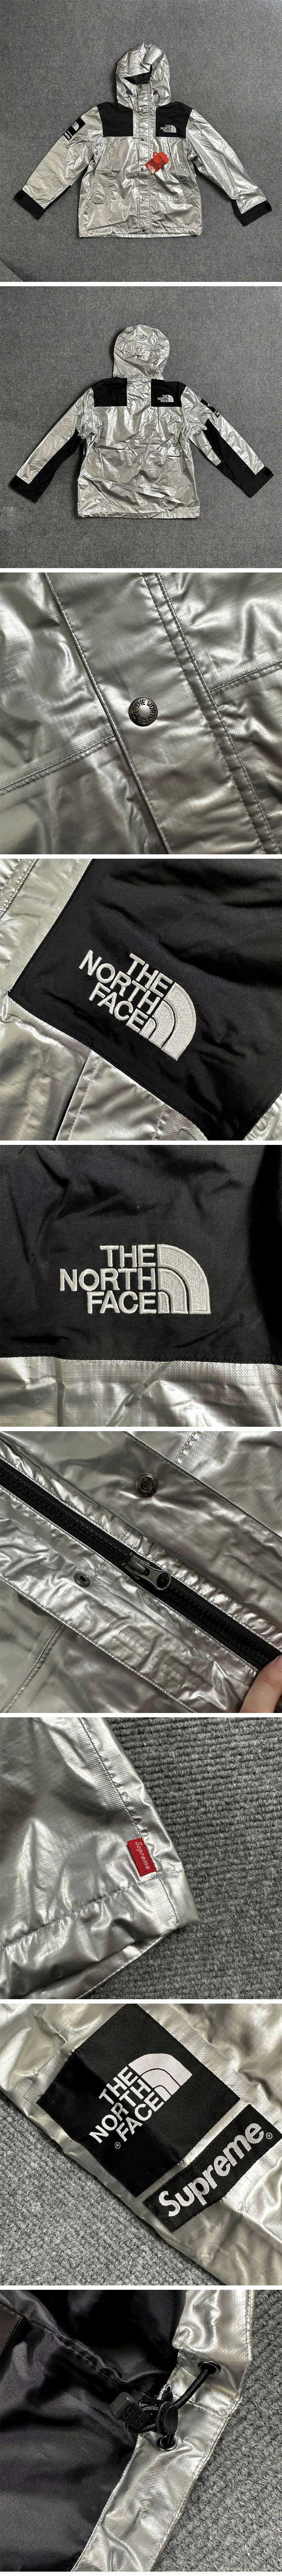 Supreme x The North Face Metallic Mountain Jacket シュプリーム x ザ ノース フェイス メタリック マウンテン ジャケット シルバー